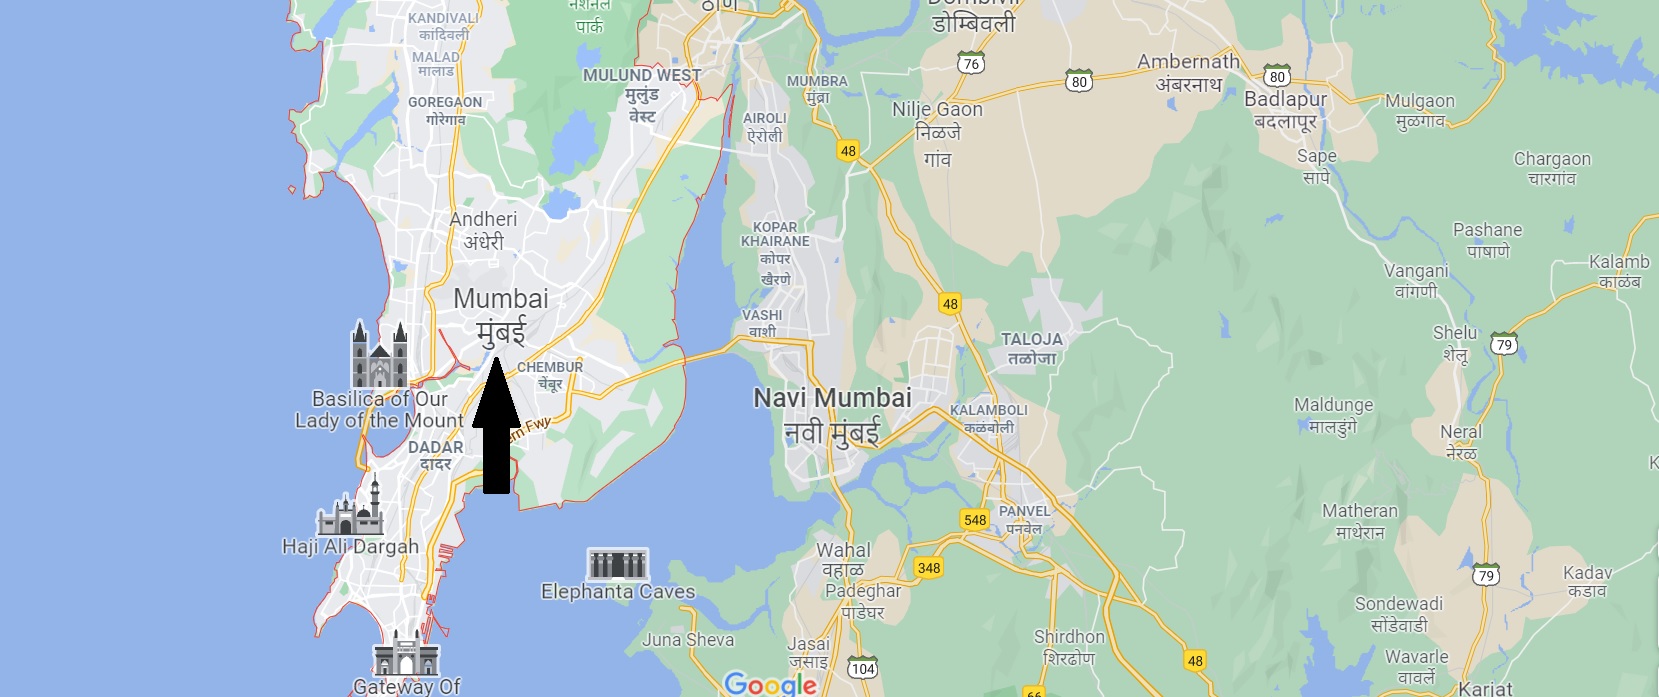 Smart World Pune location map